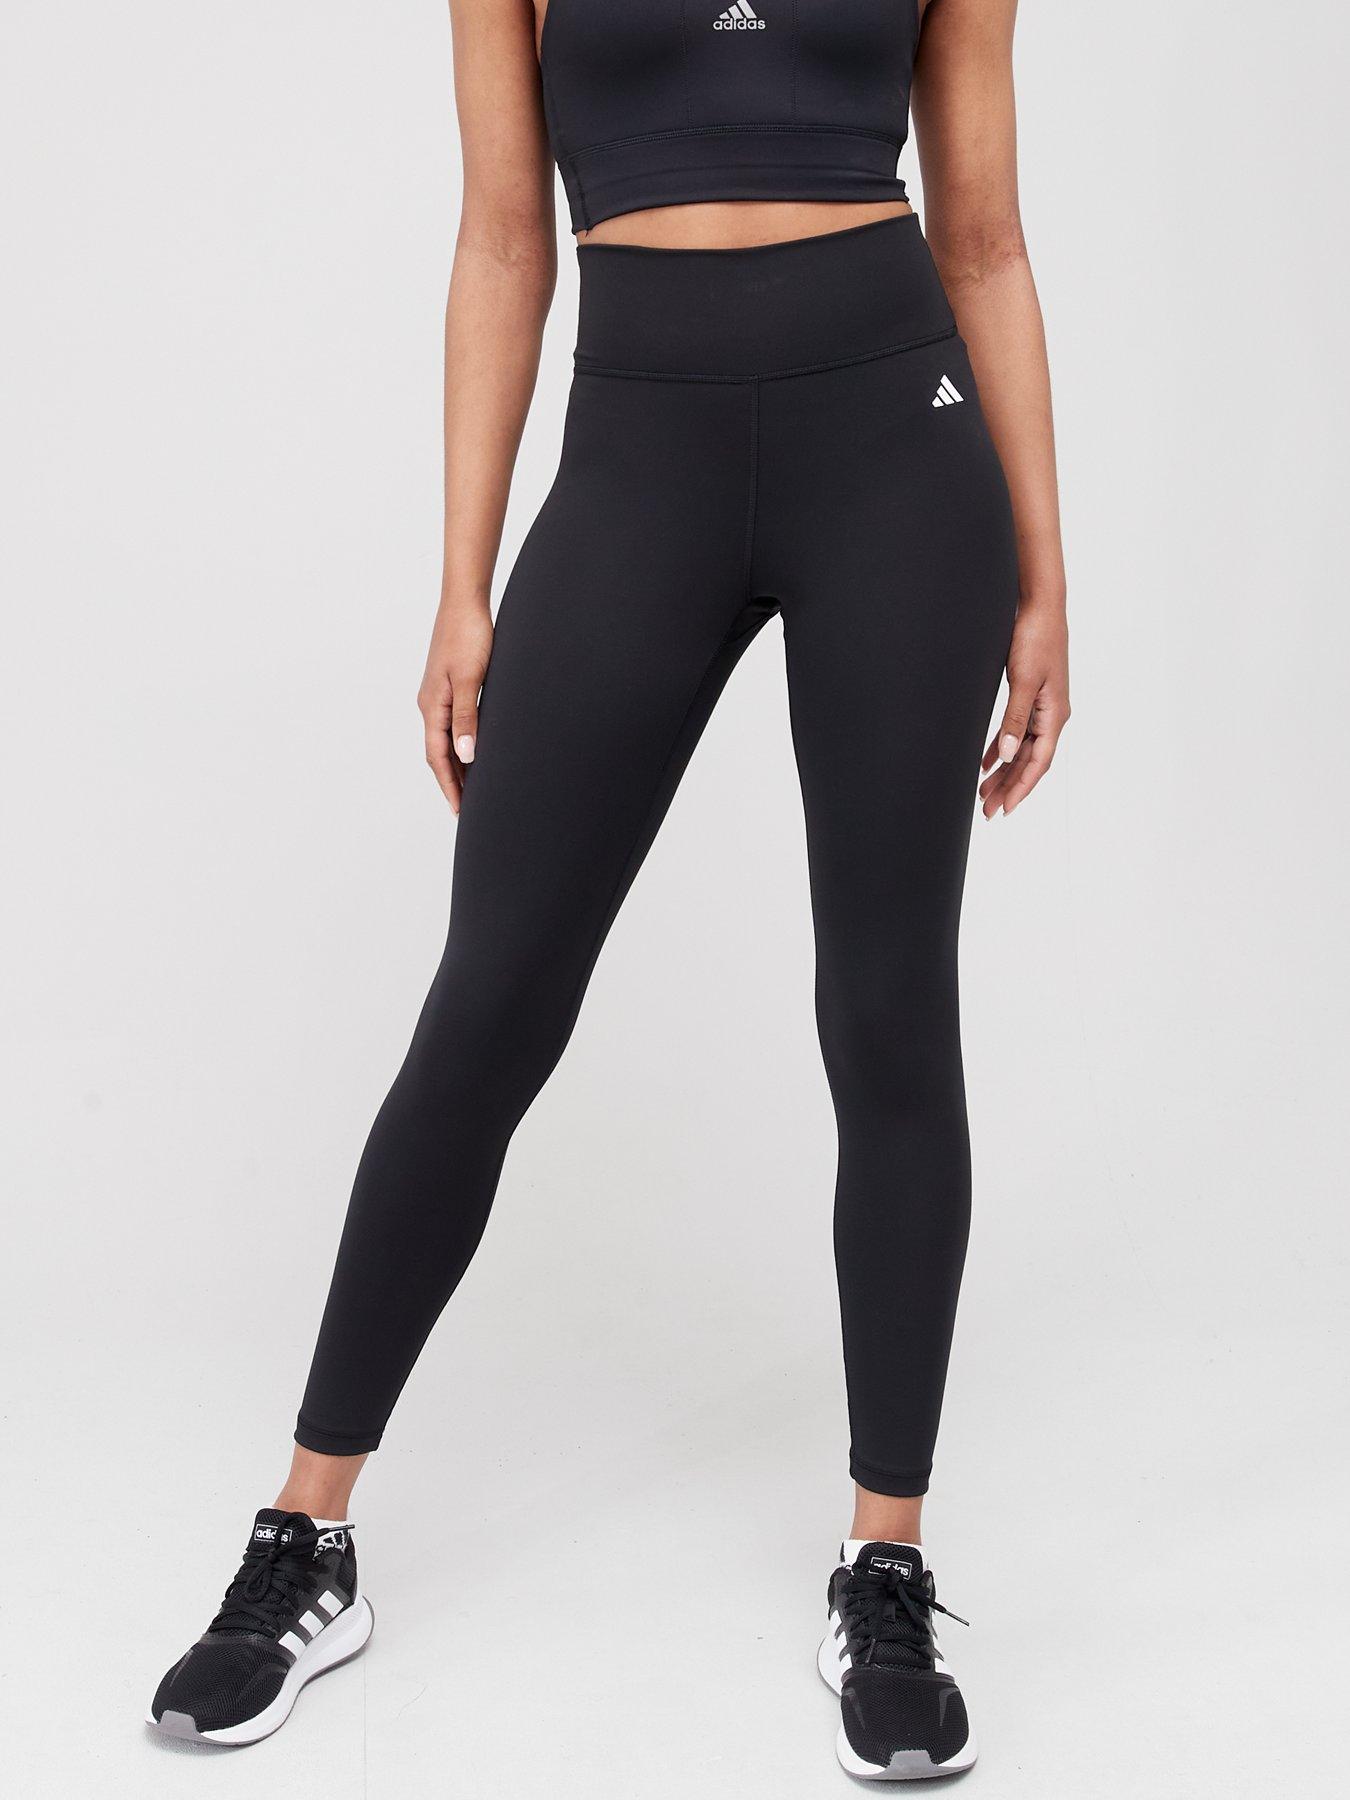 Nike Women's One Dri Fit Capri Legging - BLACK/WHITE